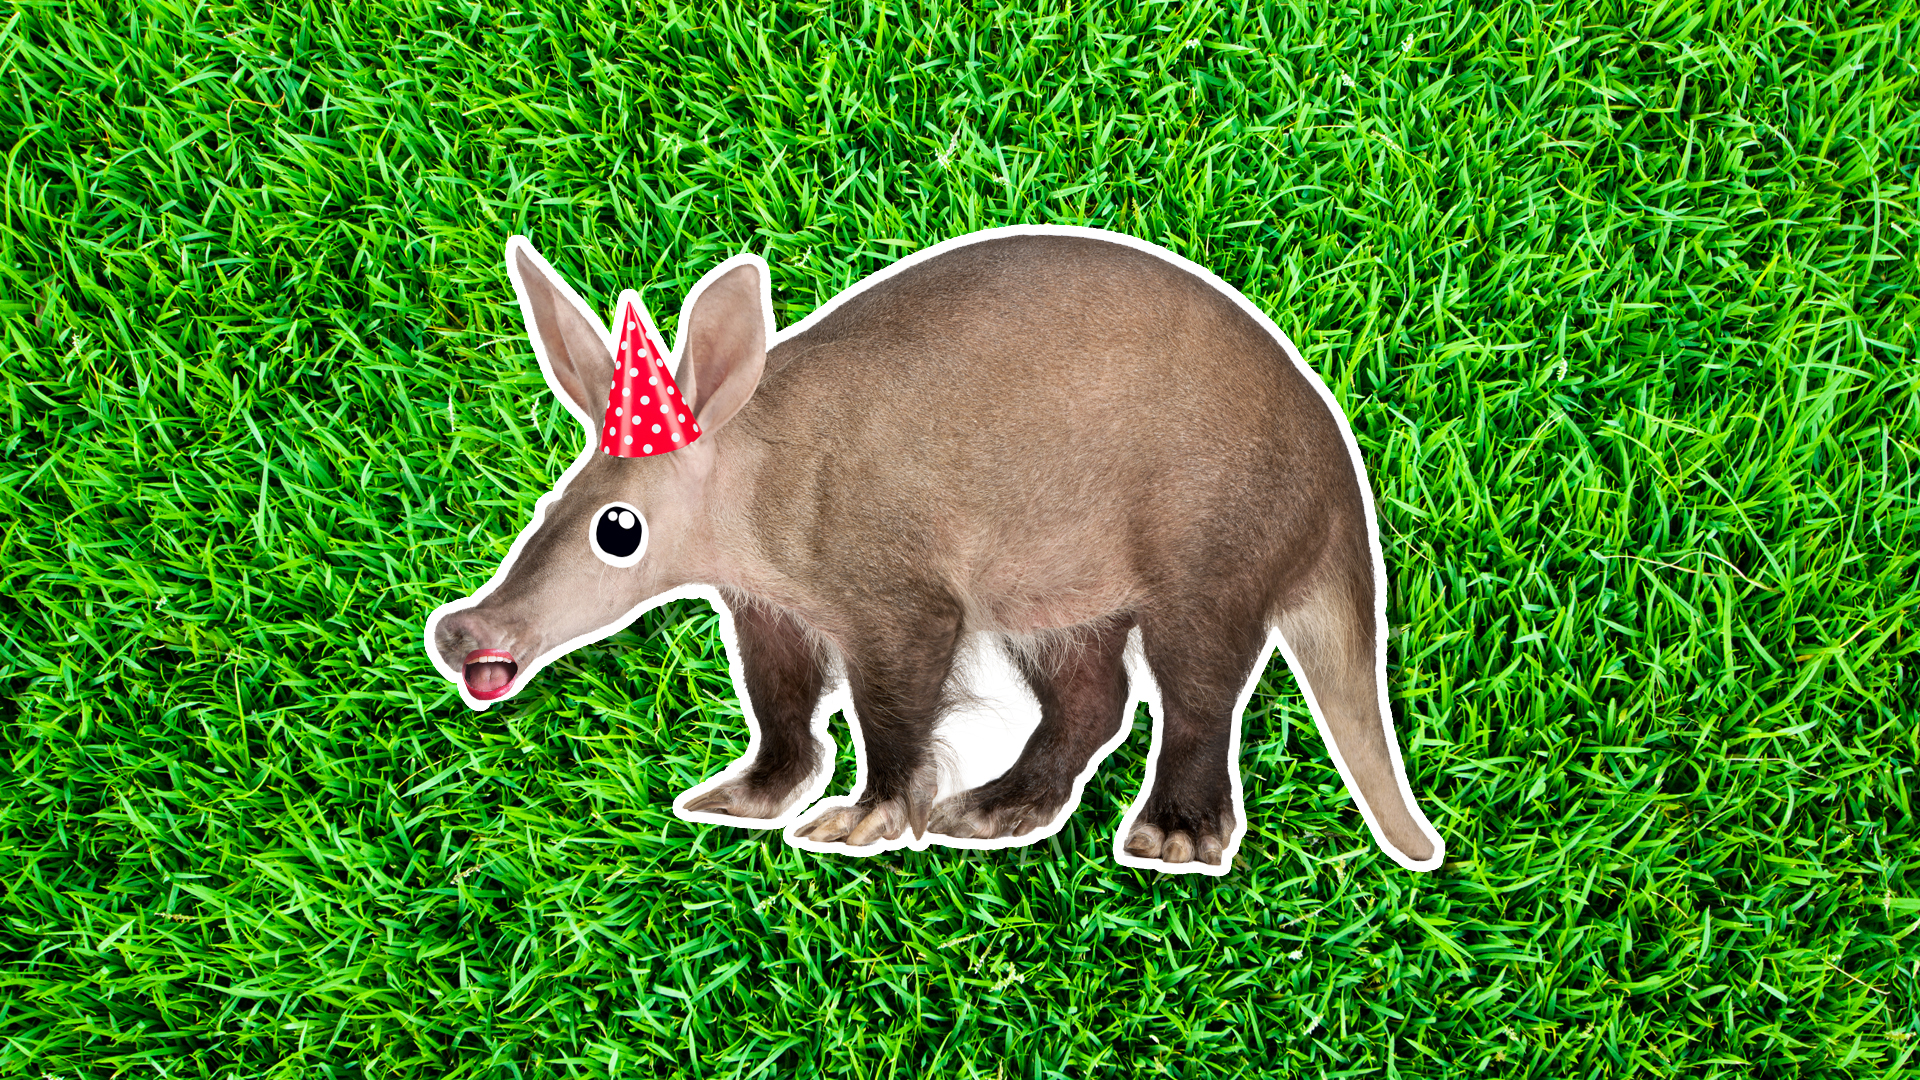 An aardvark in a party hat